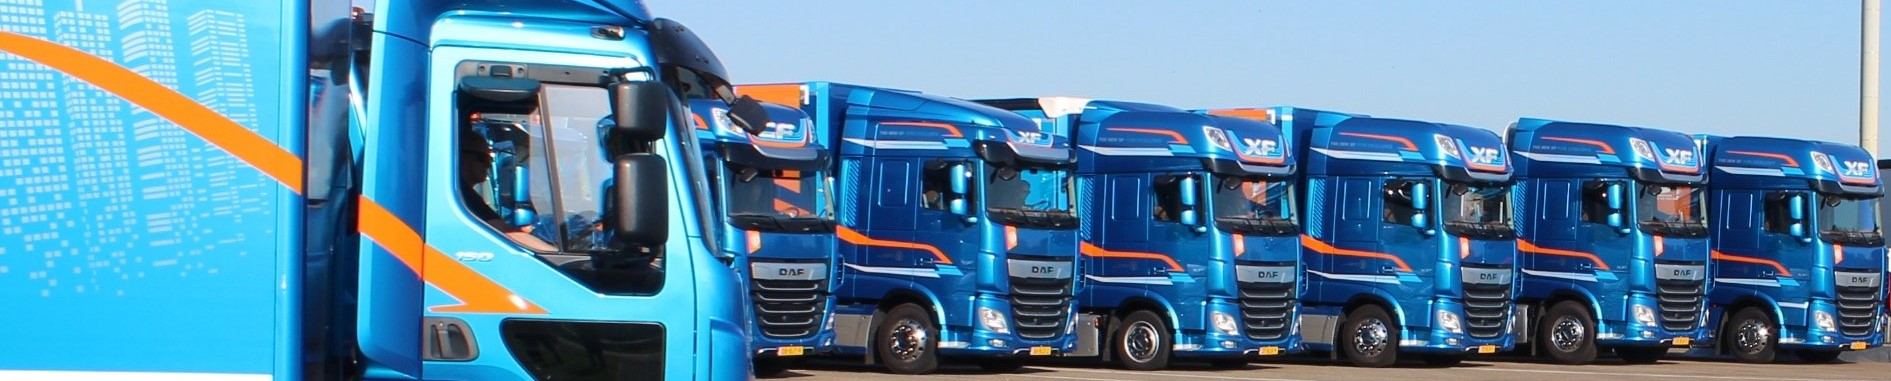 DAF Trucks Lineup